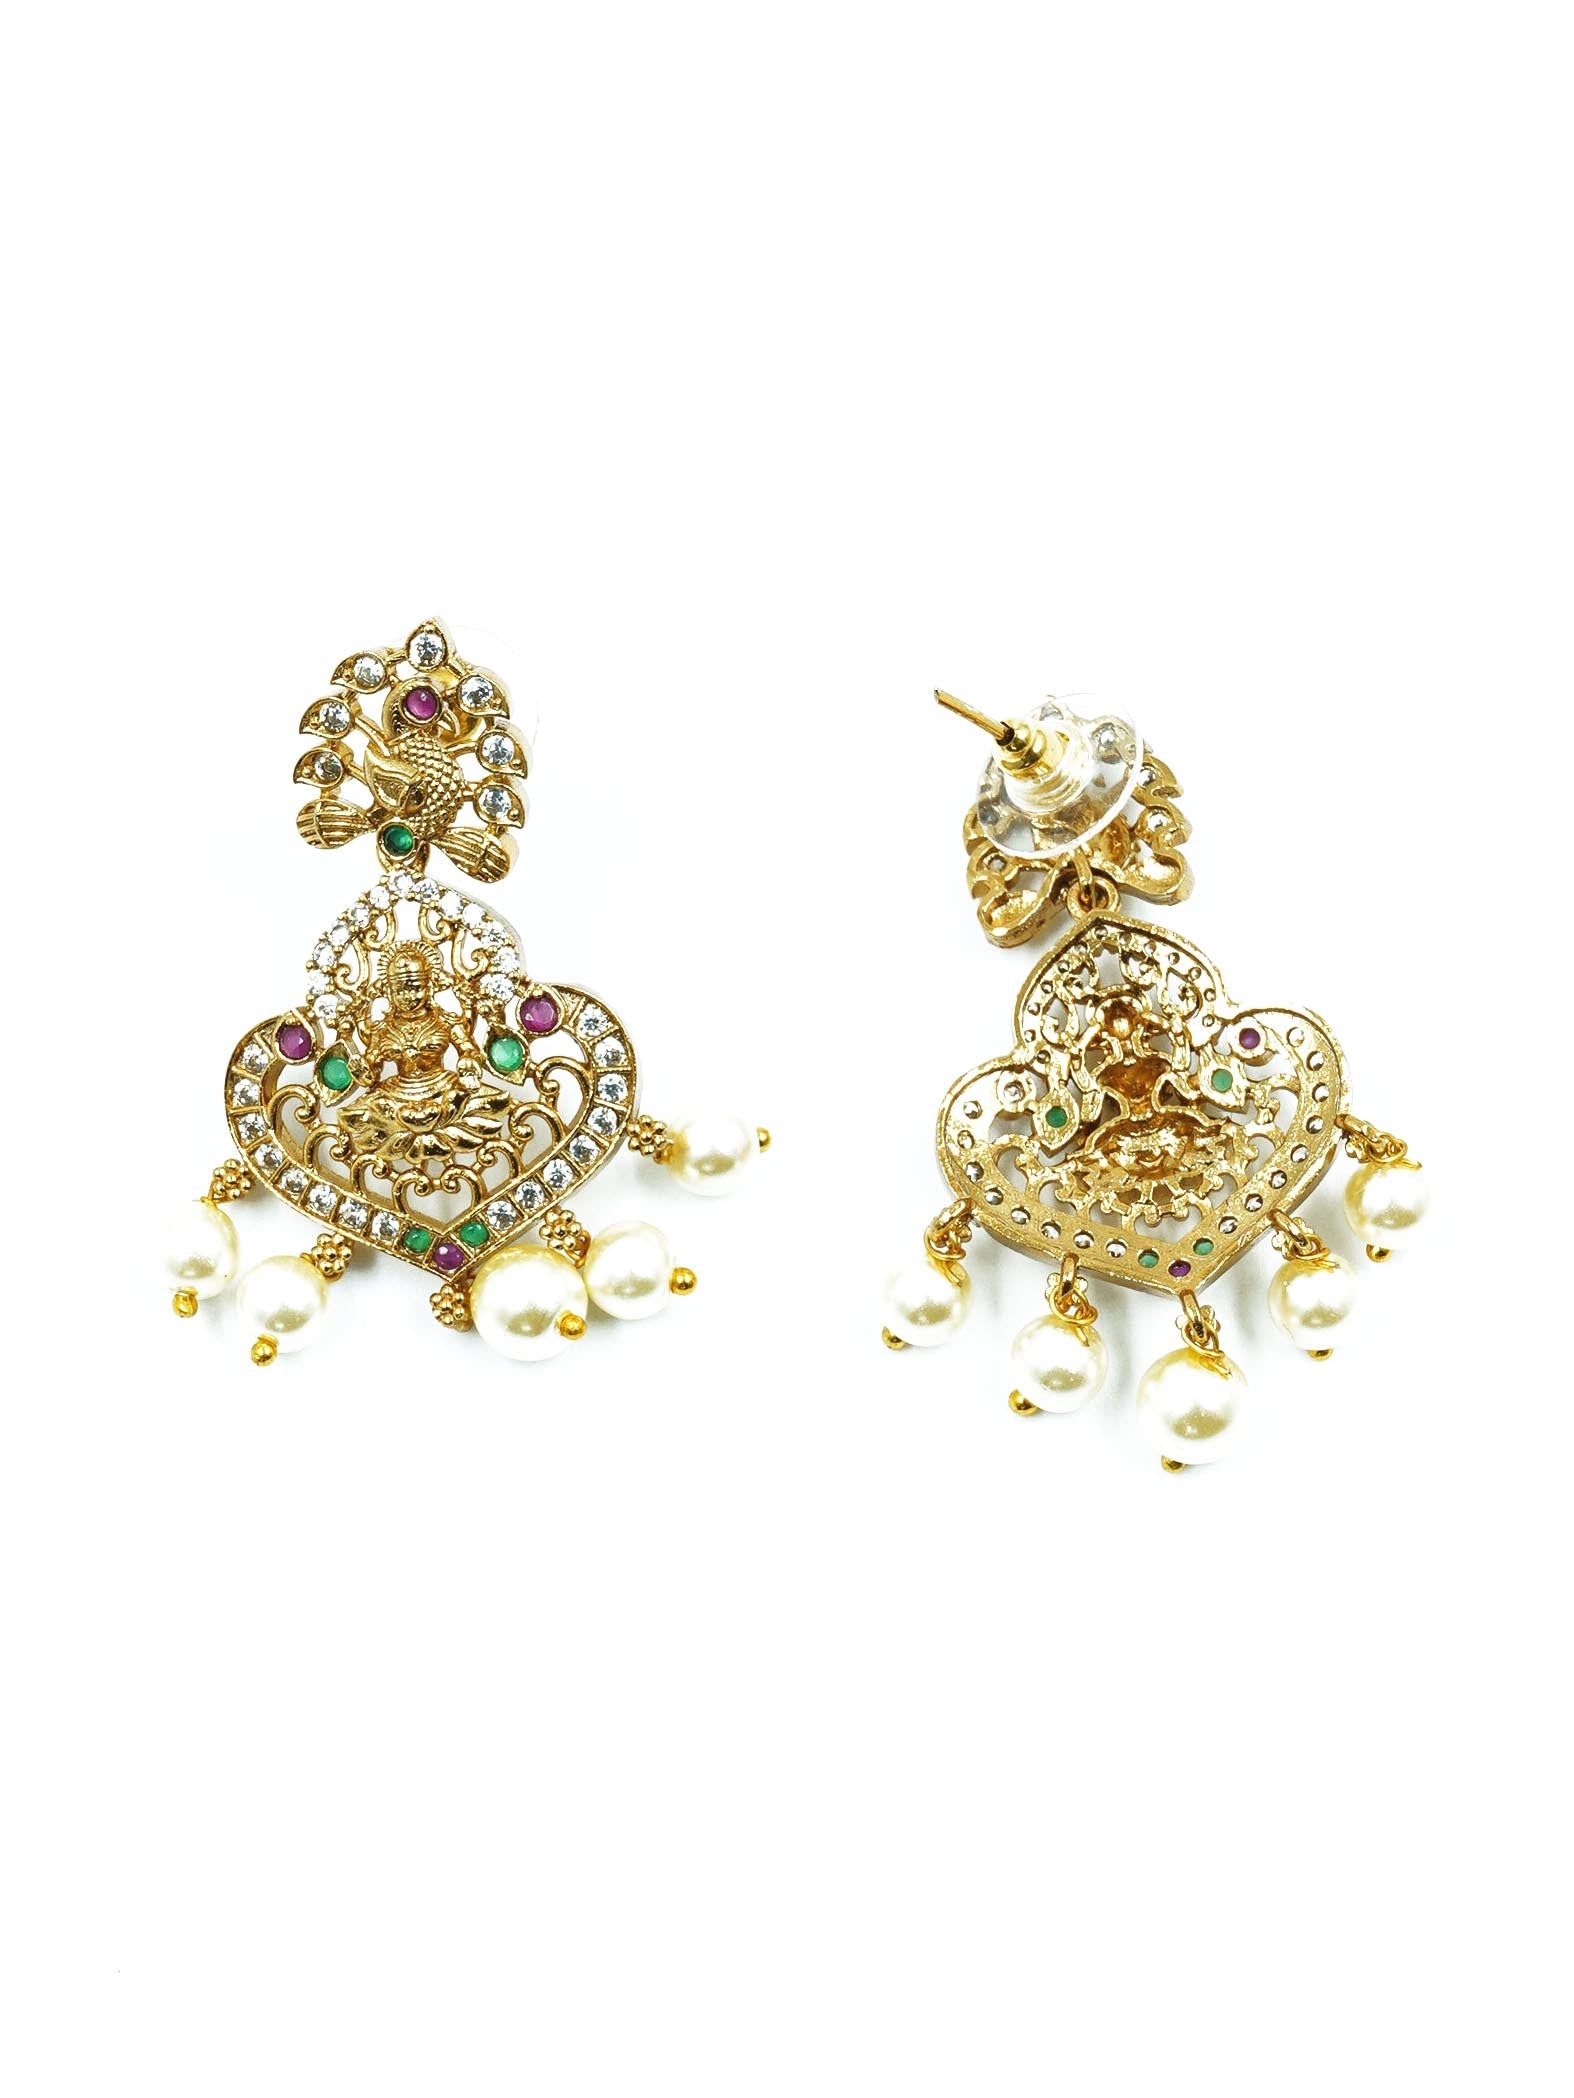 Premium Gold Finish Long Laxmi Hara Necklace Set with CZ Stones 16698N